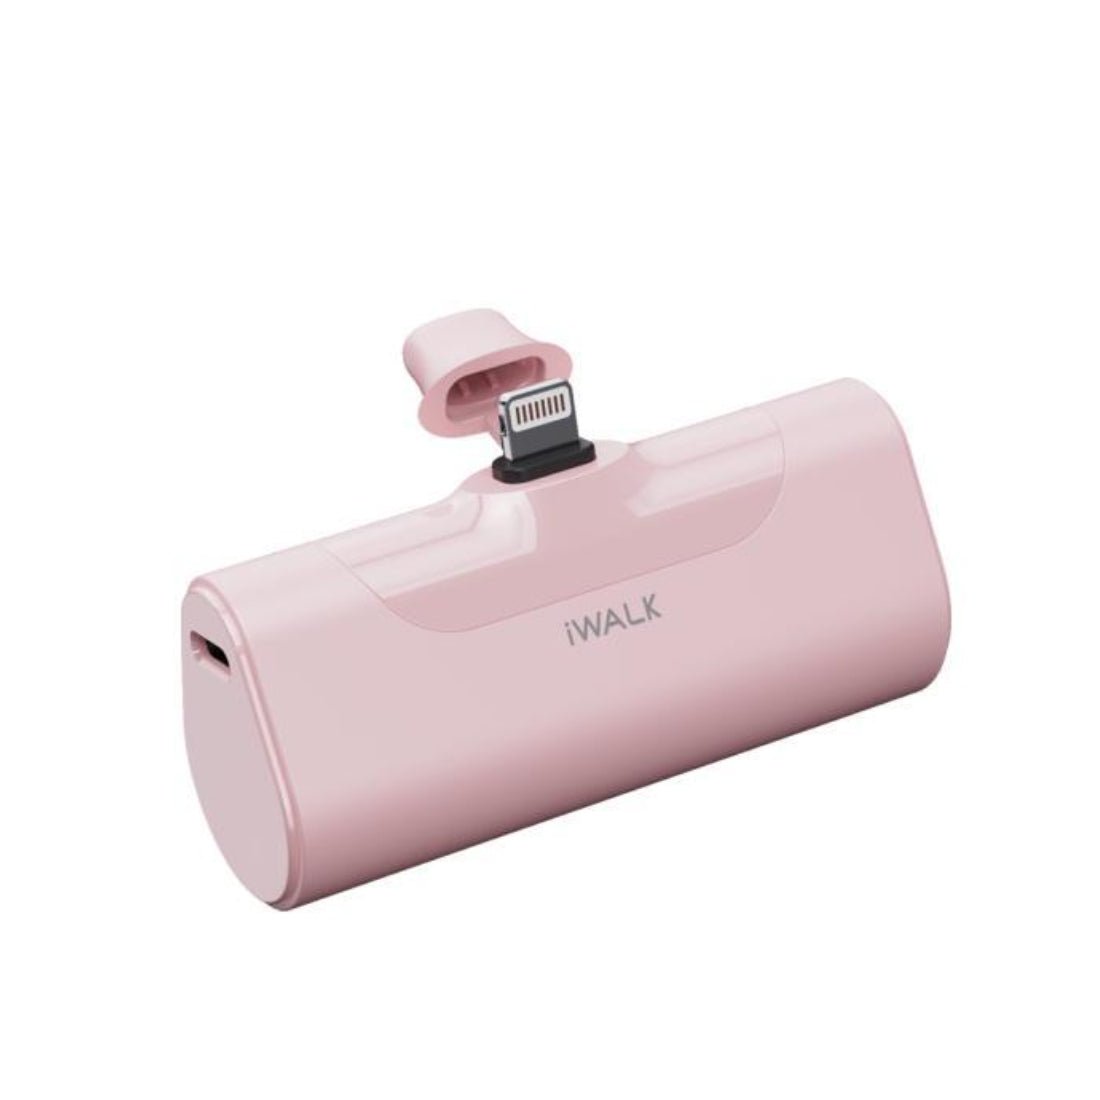 iWalk 4500mAh Portable Charger USB Lightening Battery Pack - Pink - مزود طاقة - Store 974 | ستور ٩٧٤